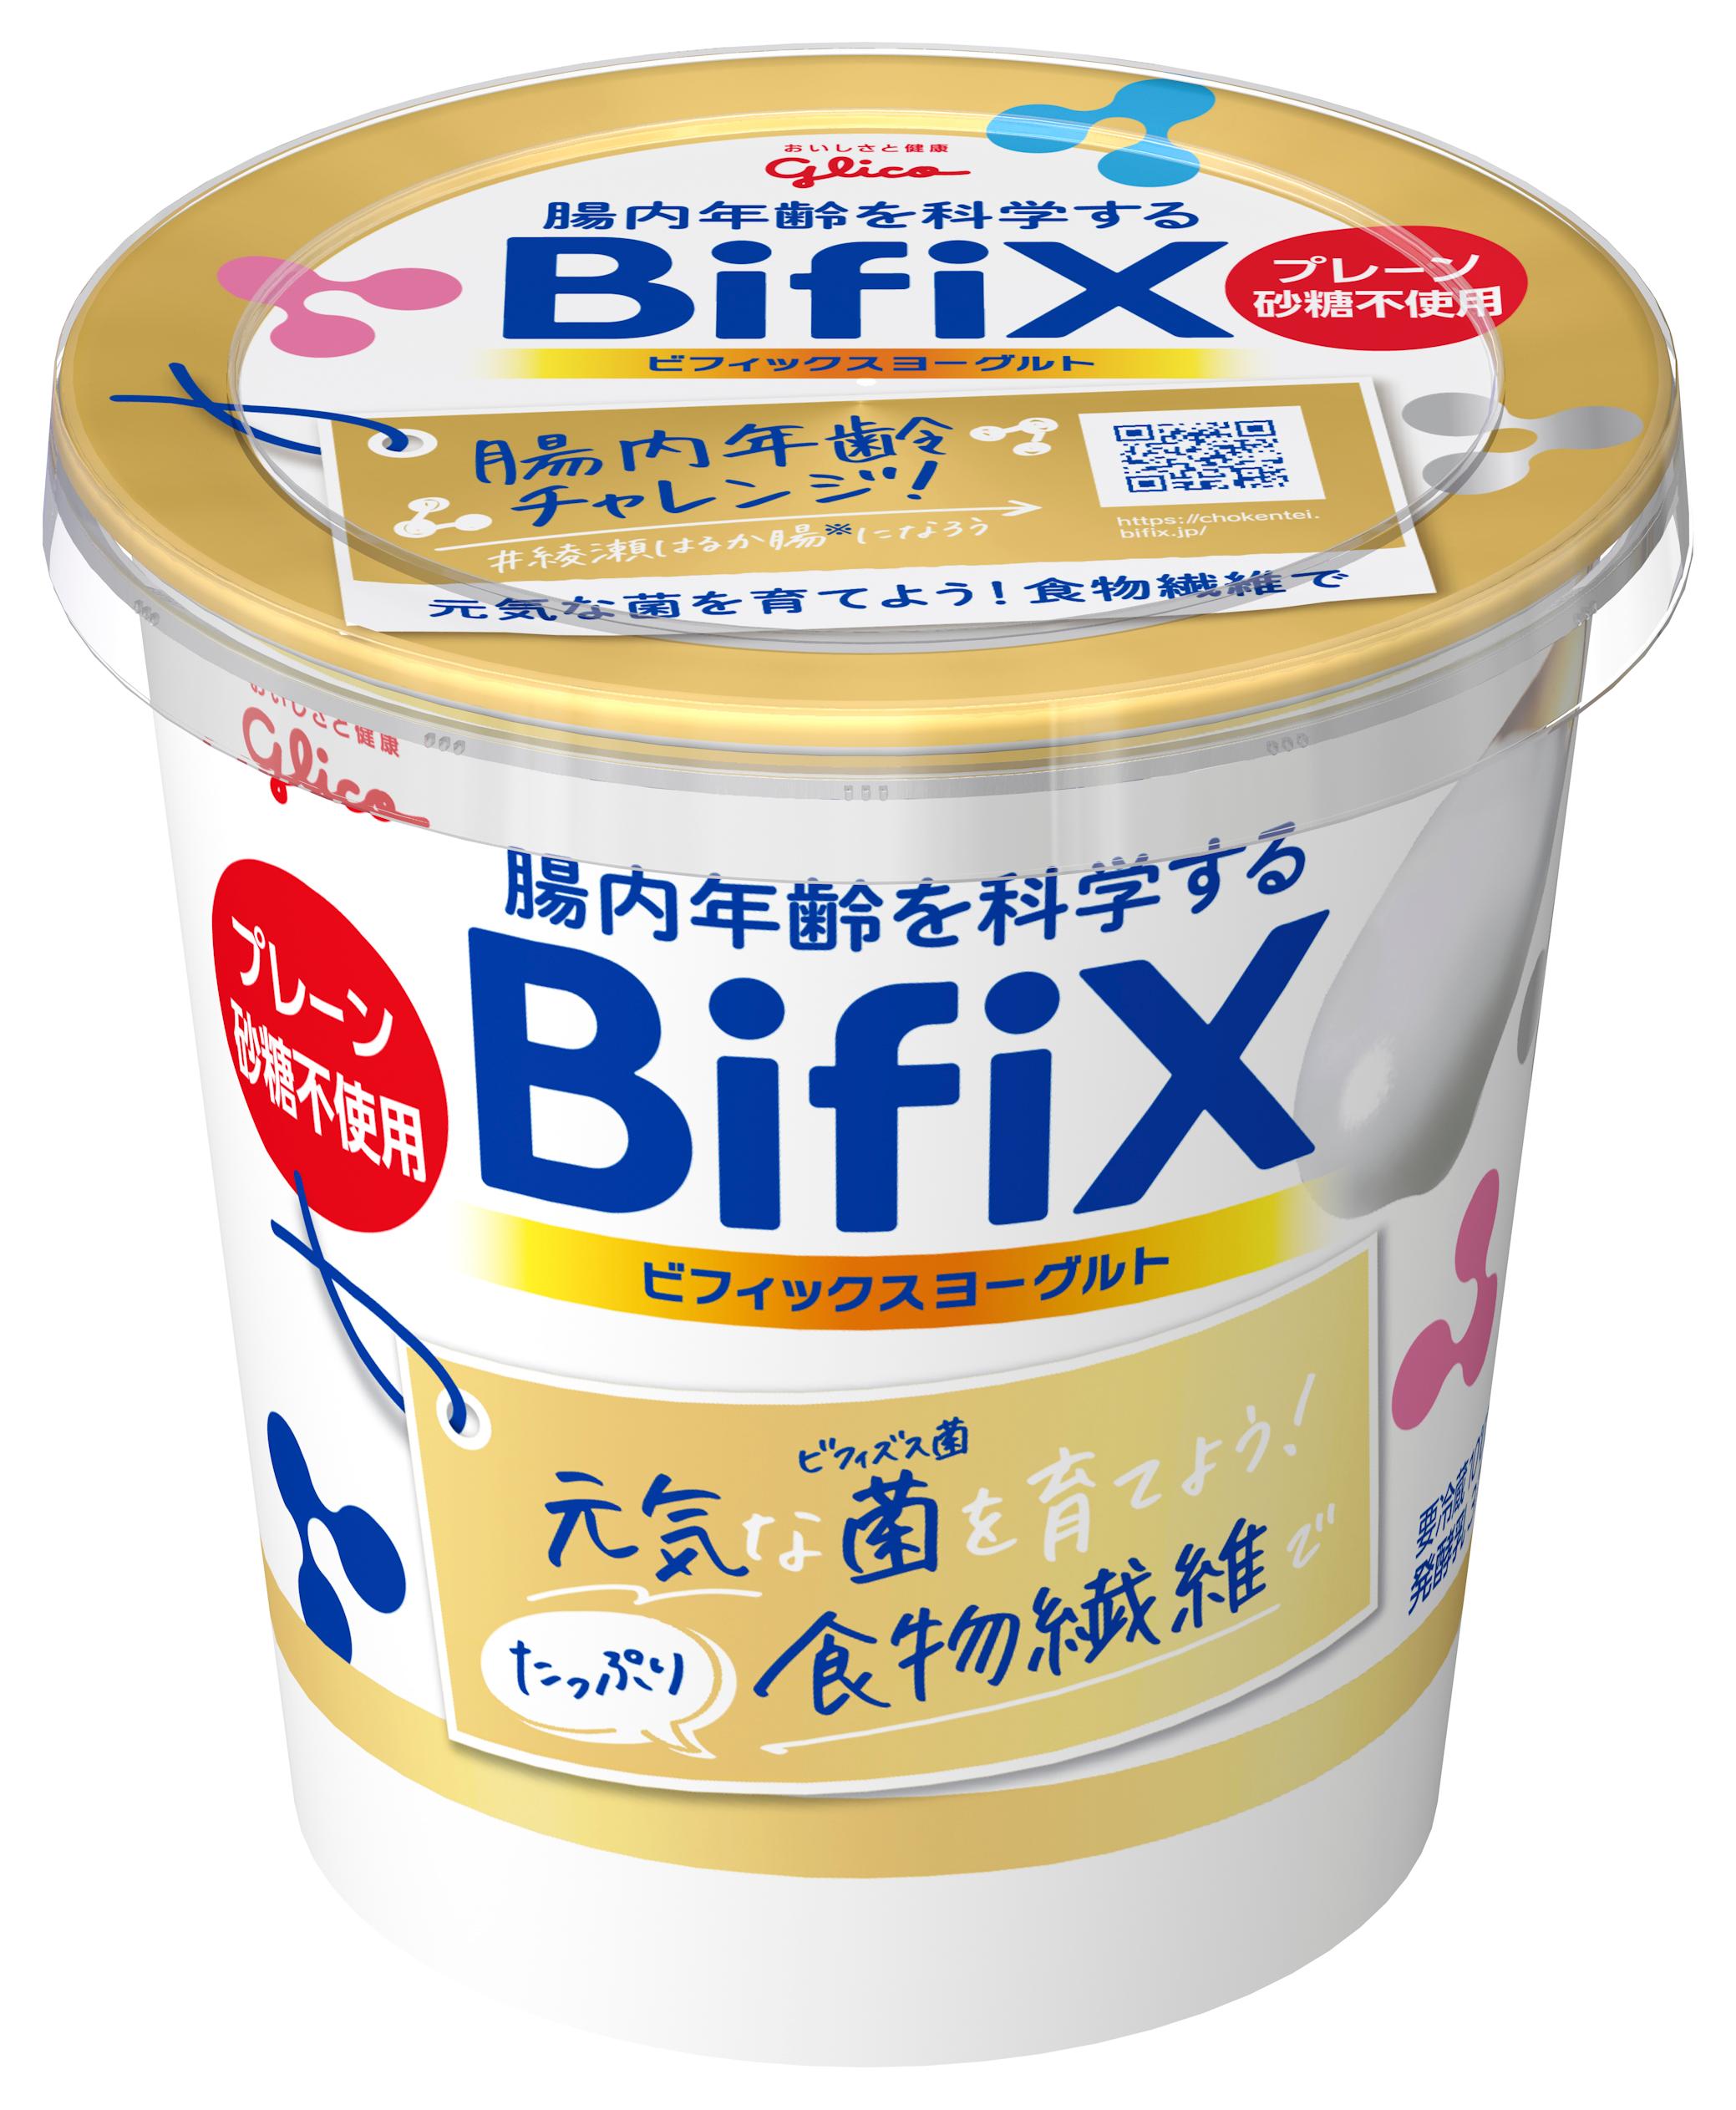 Bifixヨーグルト プレーン砂糖不使用 375g 公式 江崎グリコ Glico